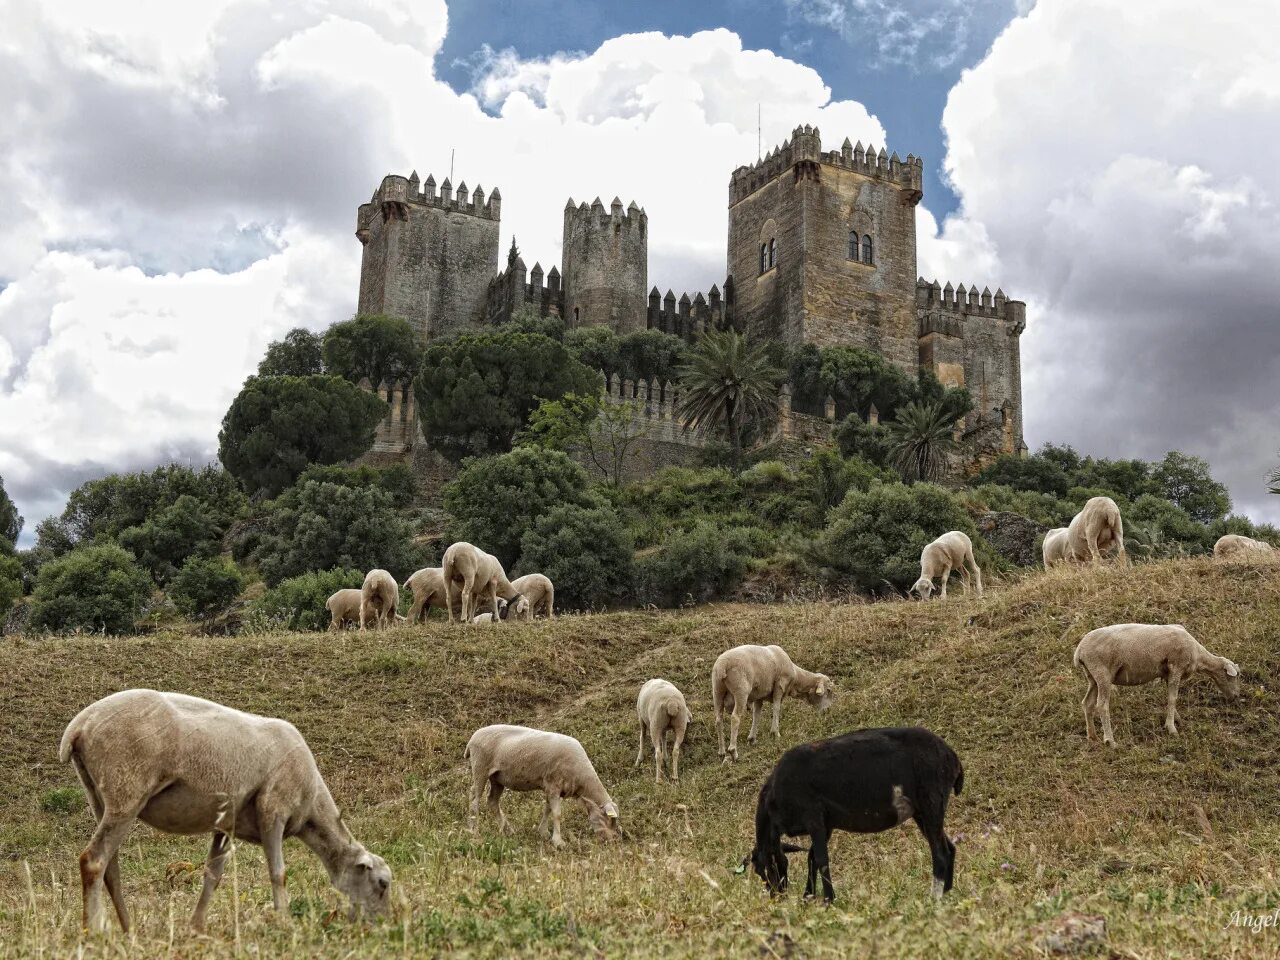 Пасет город. Овцеводство Италия Тоскана. Замок Альмодовар Испания. Овцеводство в Англии 16 век. Овцеводство в Испании.